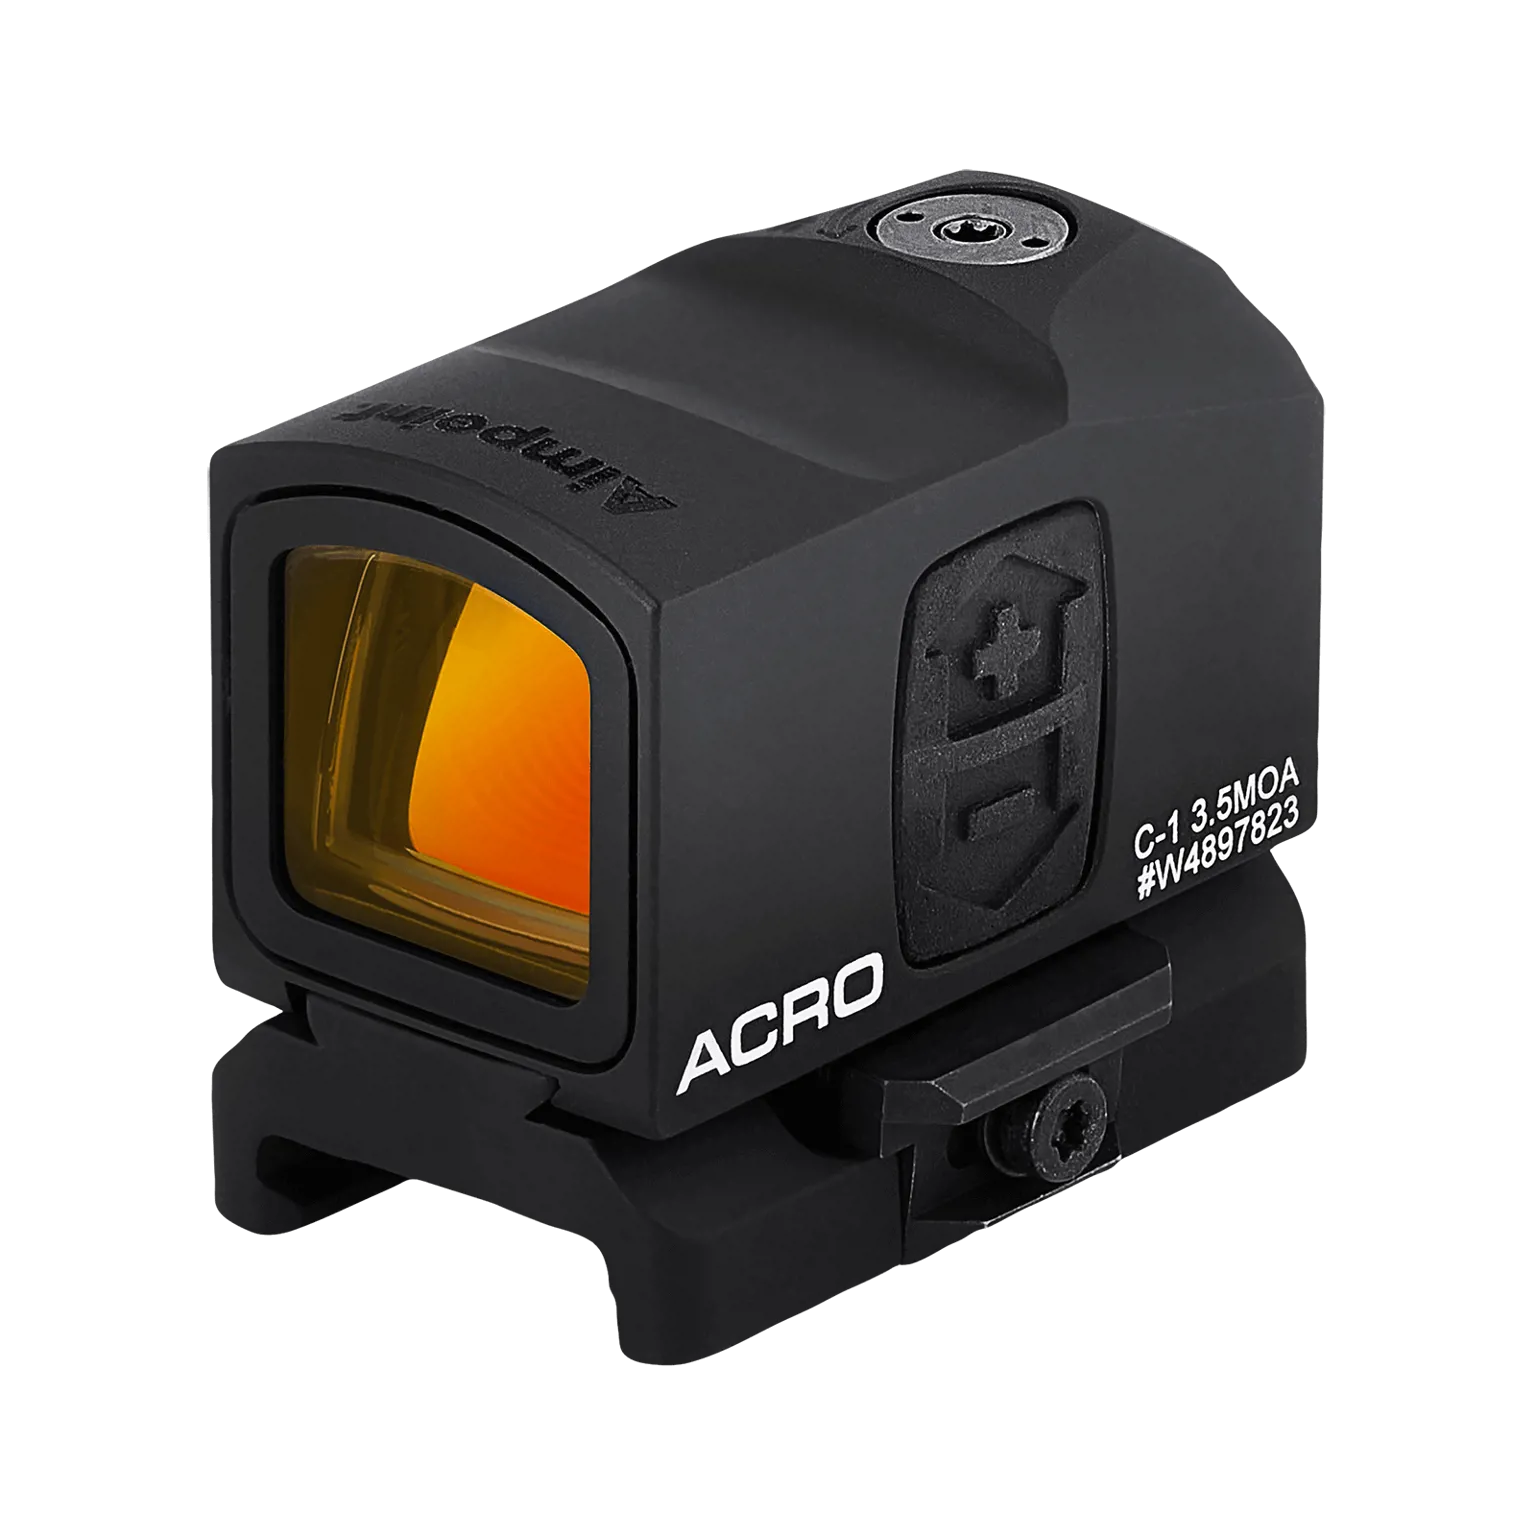 Acro C-1™ 3.5 MOA - Rotpunktvisier mit 22 mm Festmontage - 1